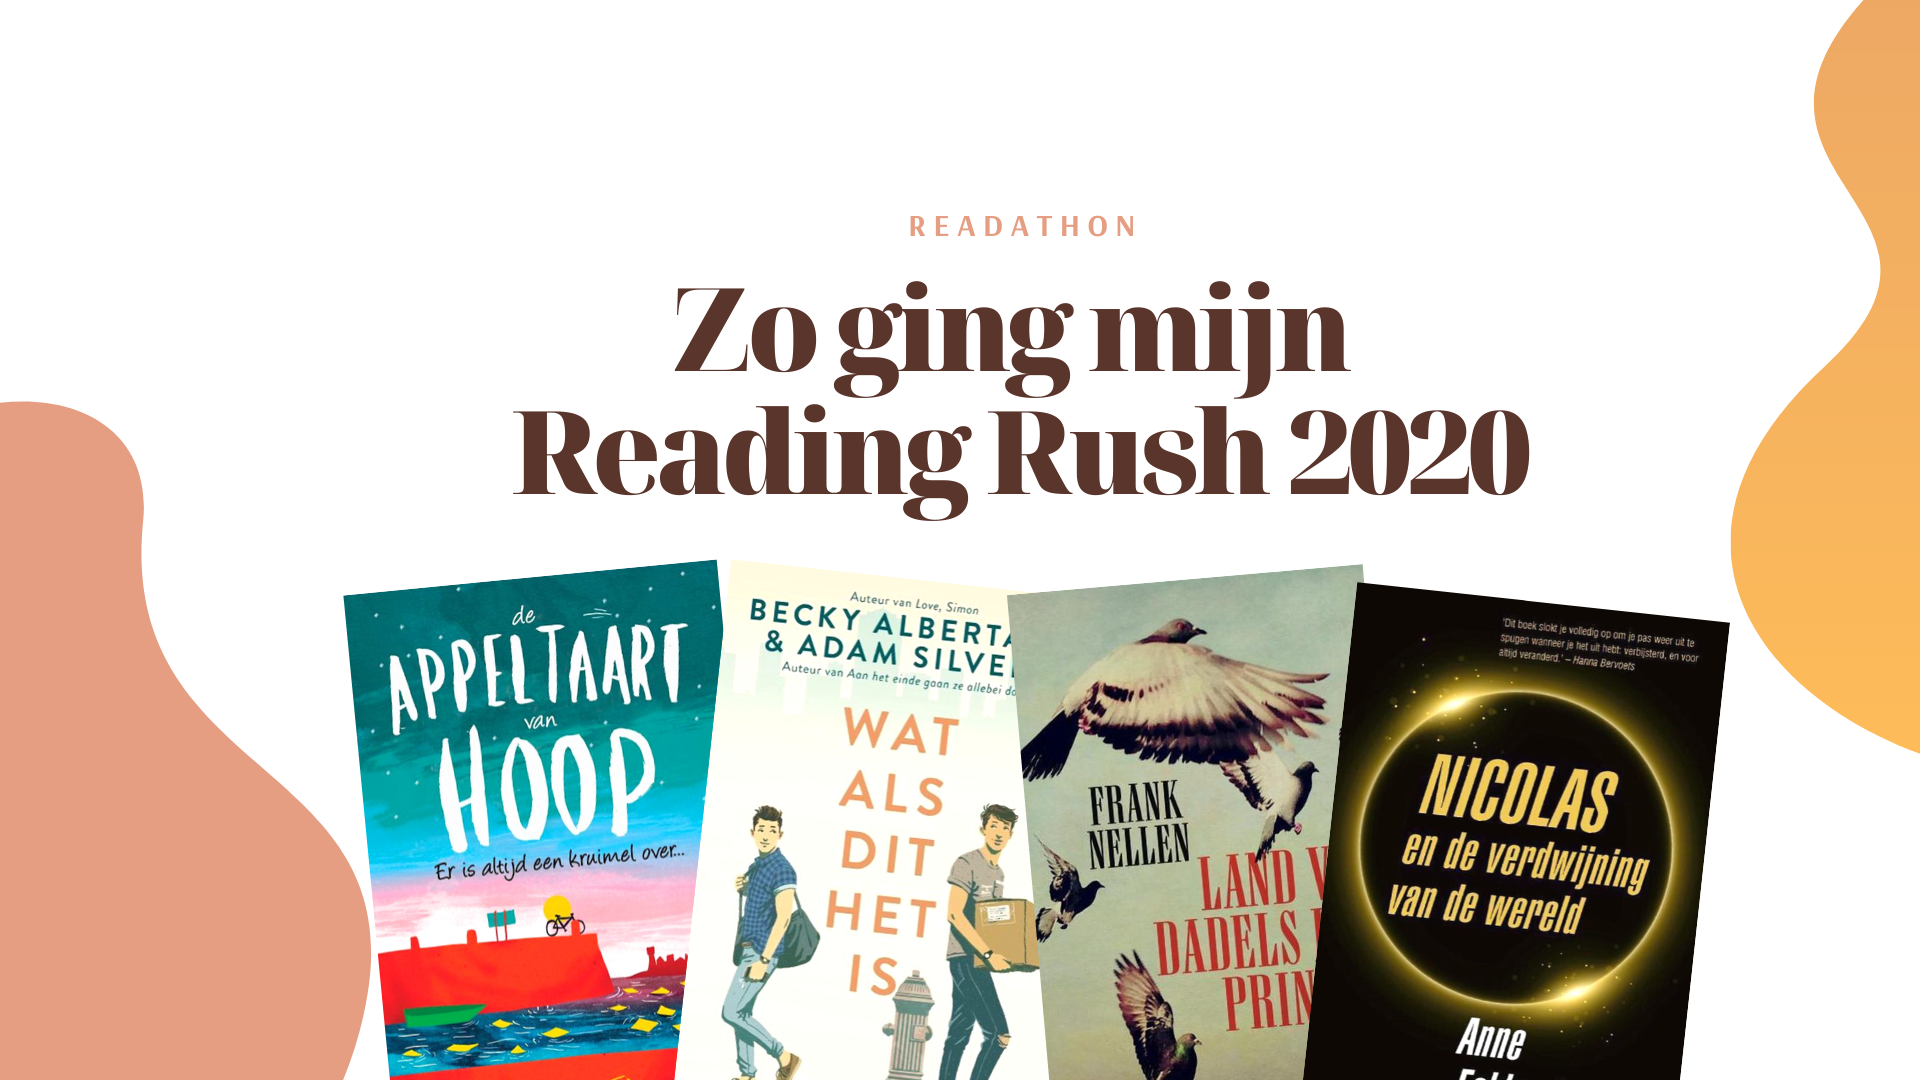 The Reading Rush 2020: Zo ging het bij mij